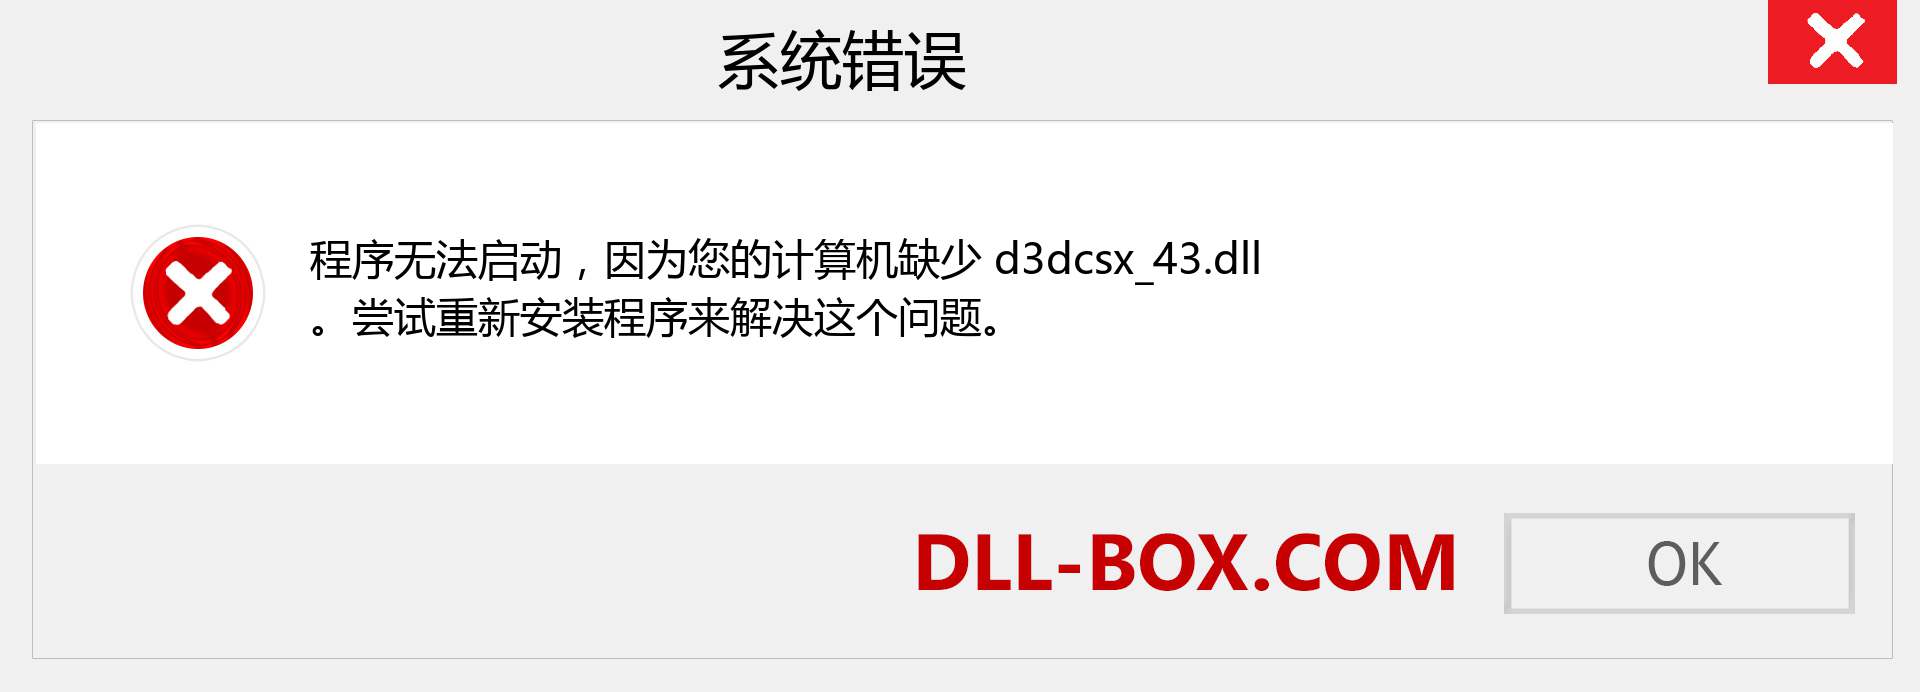 d3dcsx_43.dll 文件丢失？。 适用于 Windows 7、8、10 的下载 - 修复 Windows、照片、图像上的 d3dcsx_43 dll 丢失错误